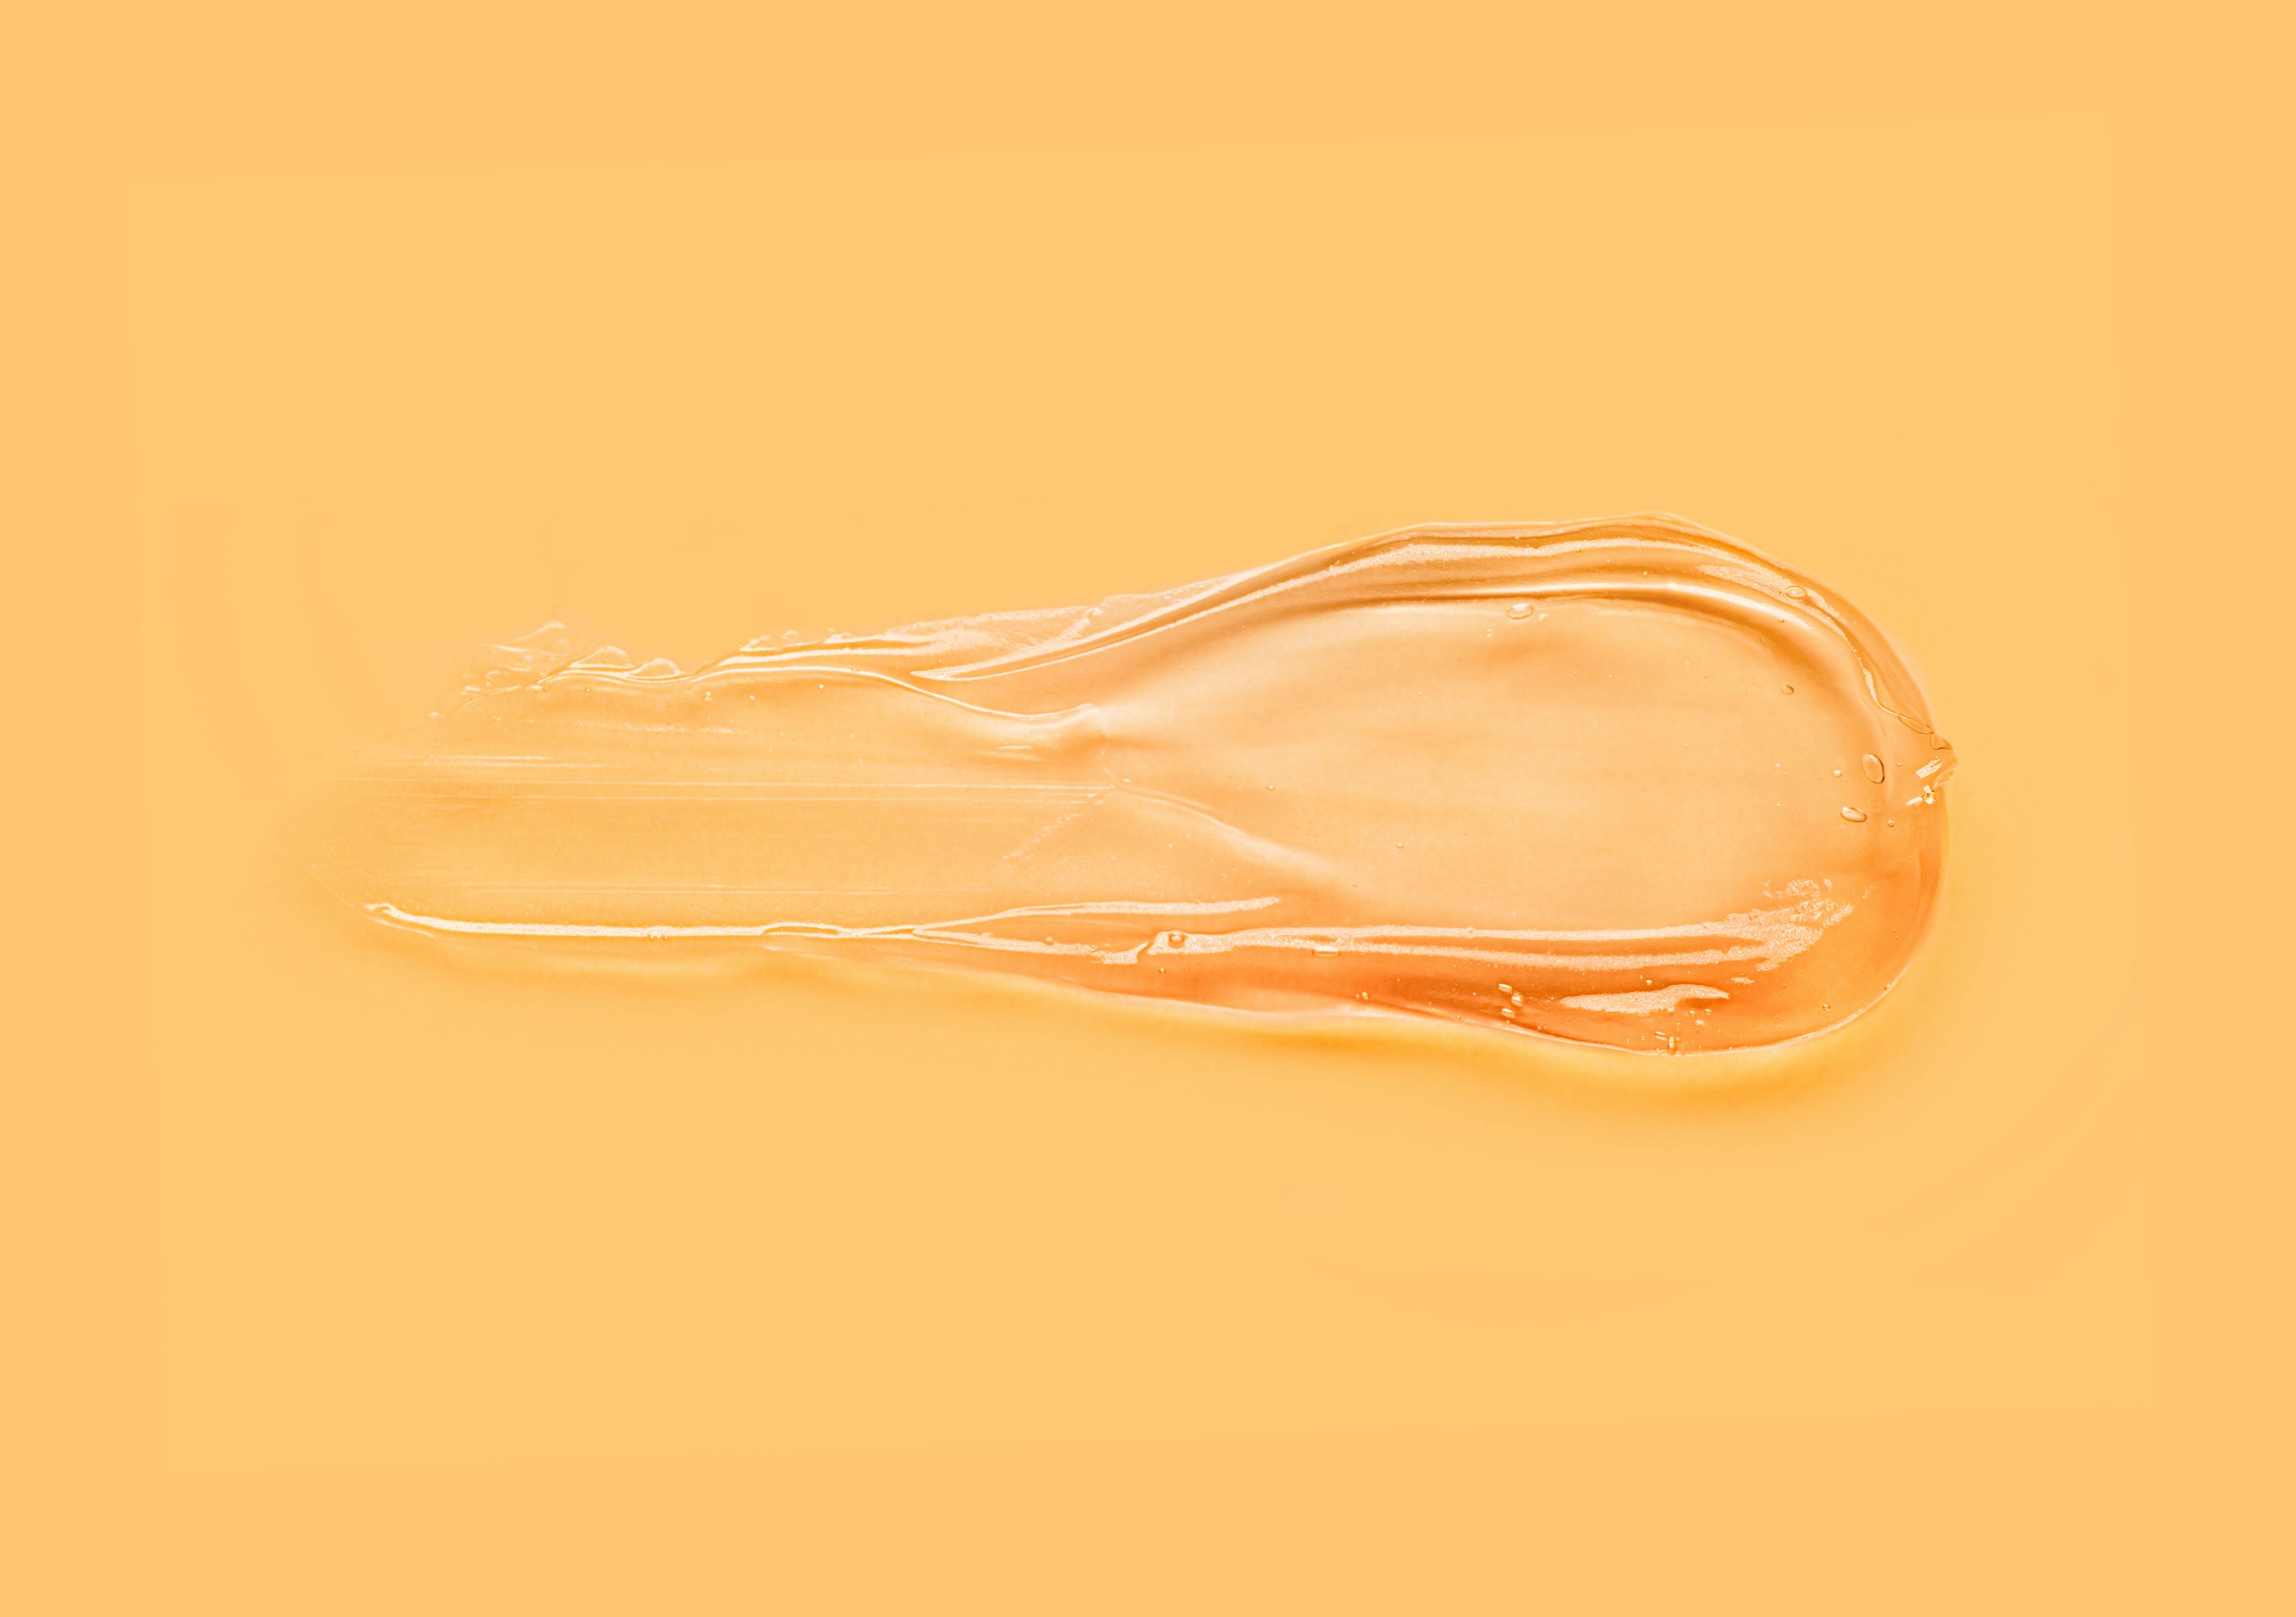 Light orange gel on an orange background